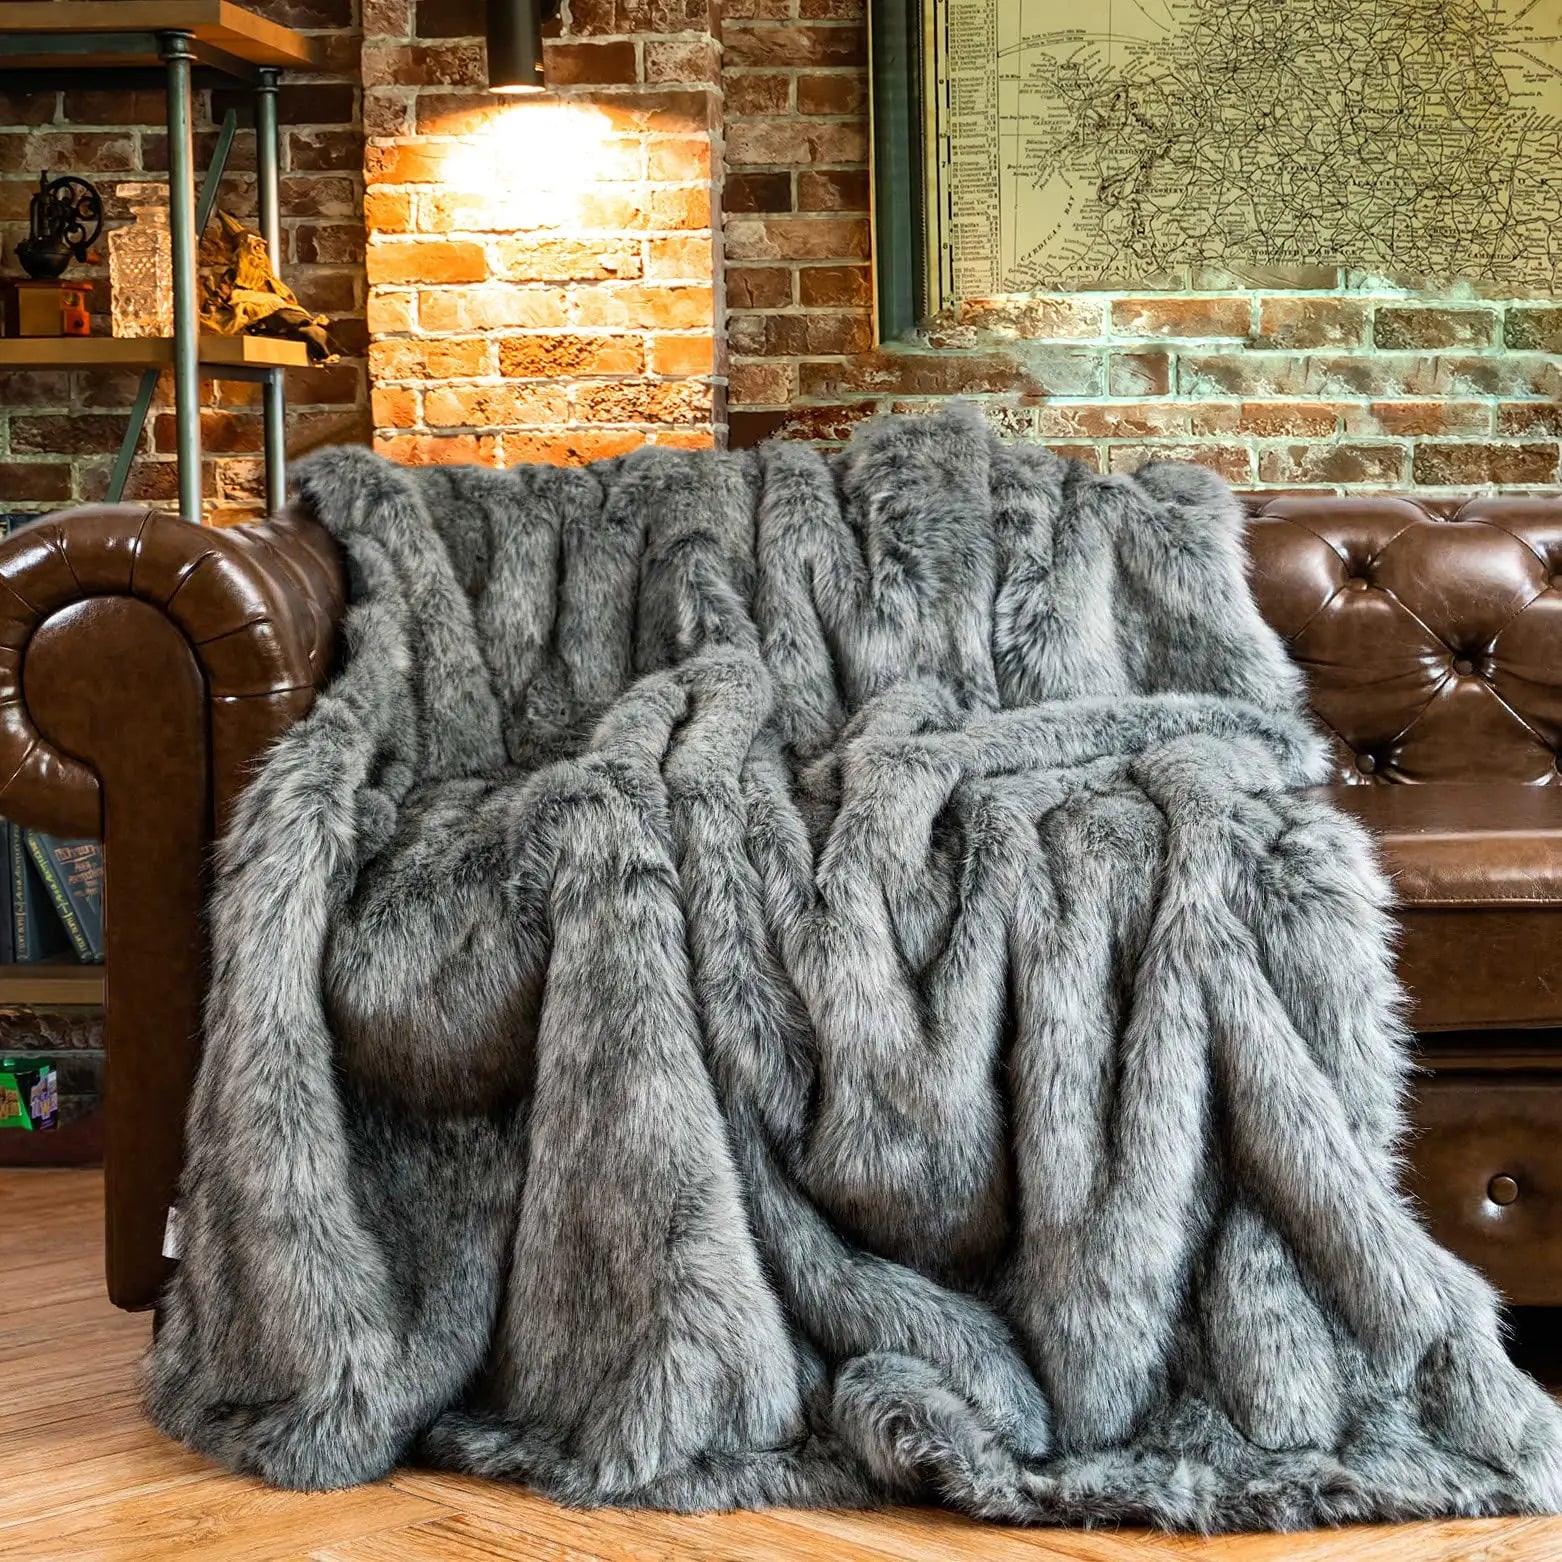 BATTILO Faux Fur Blanket Luxury Decorative Throw Blanket Fuzzy Warm Cozy Plaid Throws For Couch Bed Blanket King Size 150x200cm